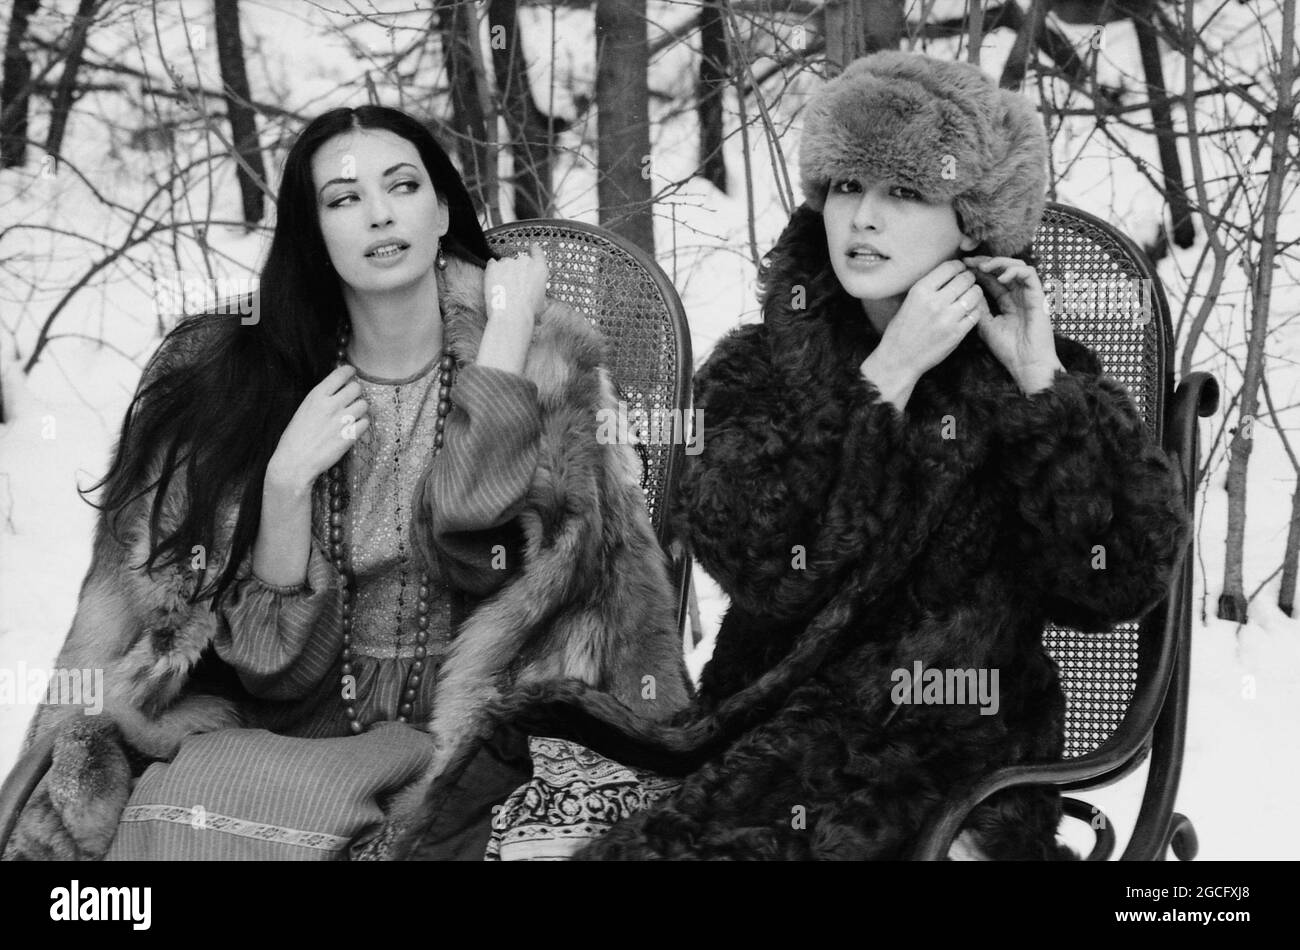 Le attrici rumene (e sorelle) Julieta Szönyi & anca Szönyi, 1980 Foto Stock